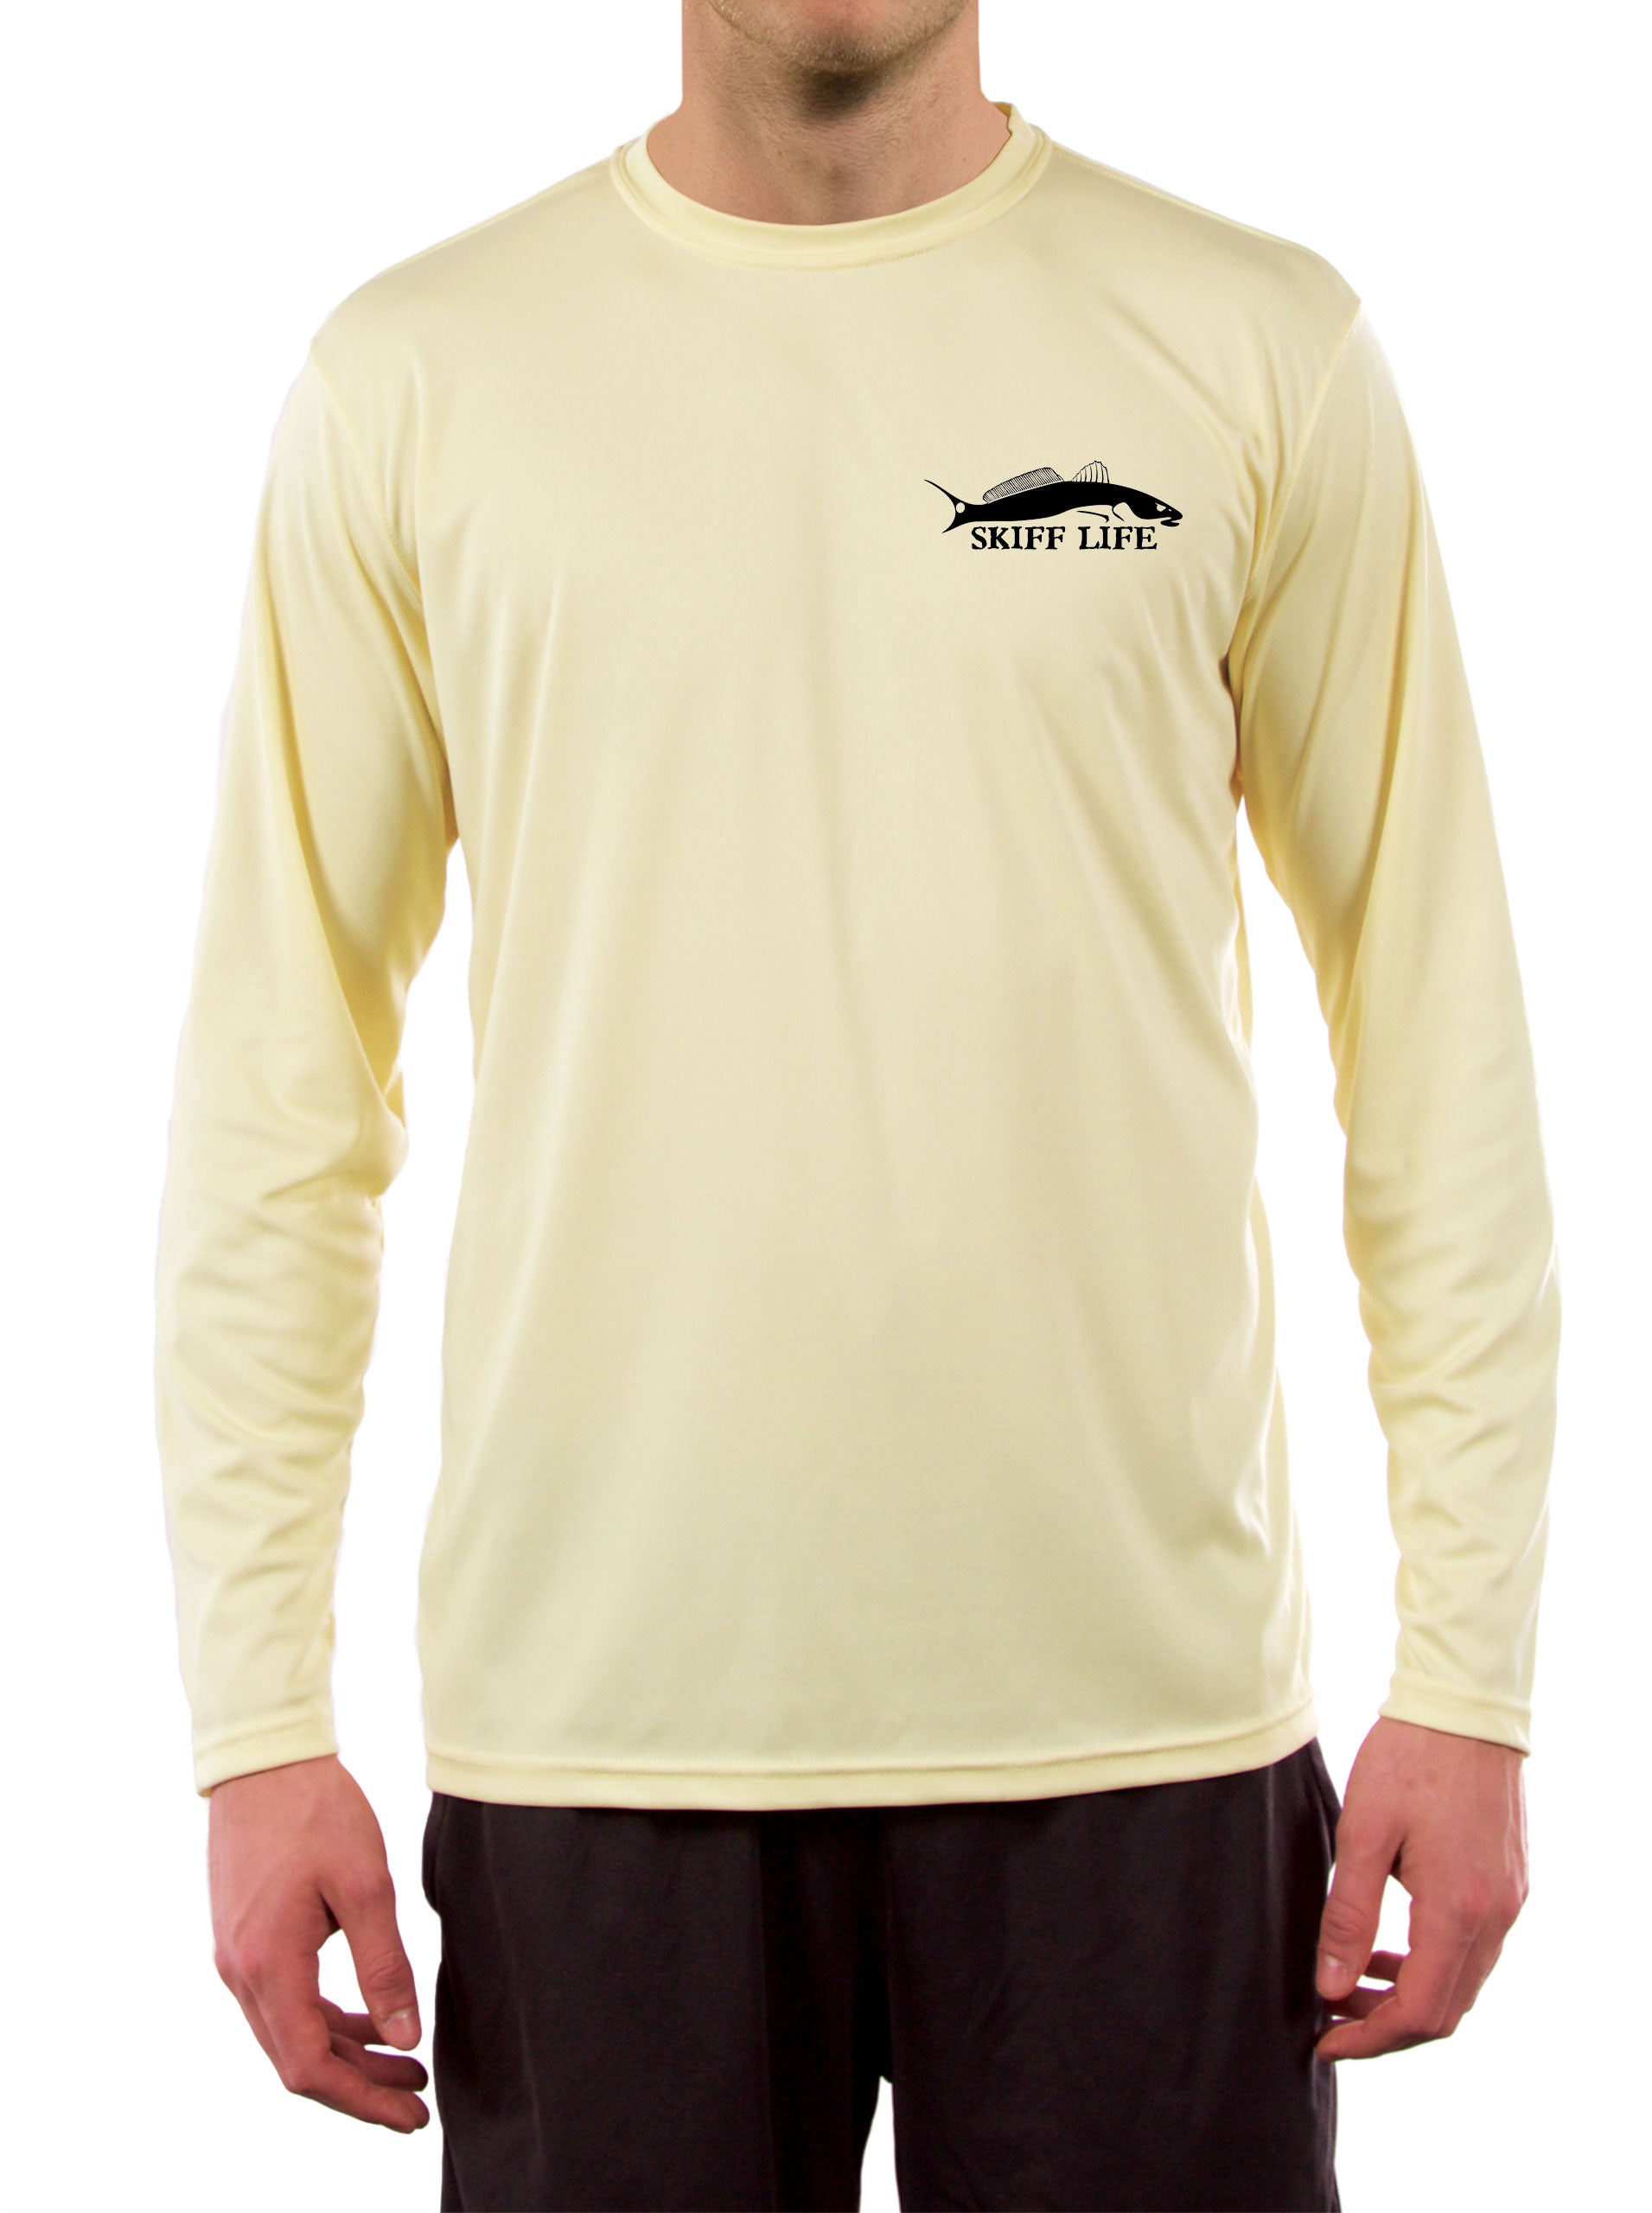 Flounder Fishing Shirts for Men Fluke - UV Protected +50 Sun Protectio –  Skiff Life